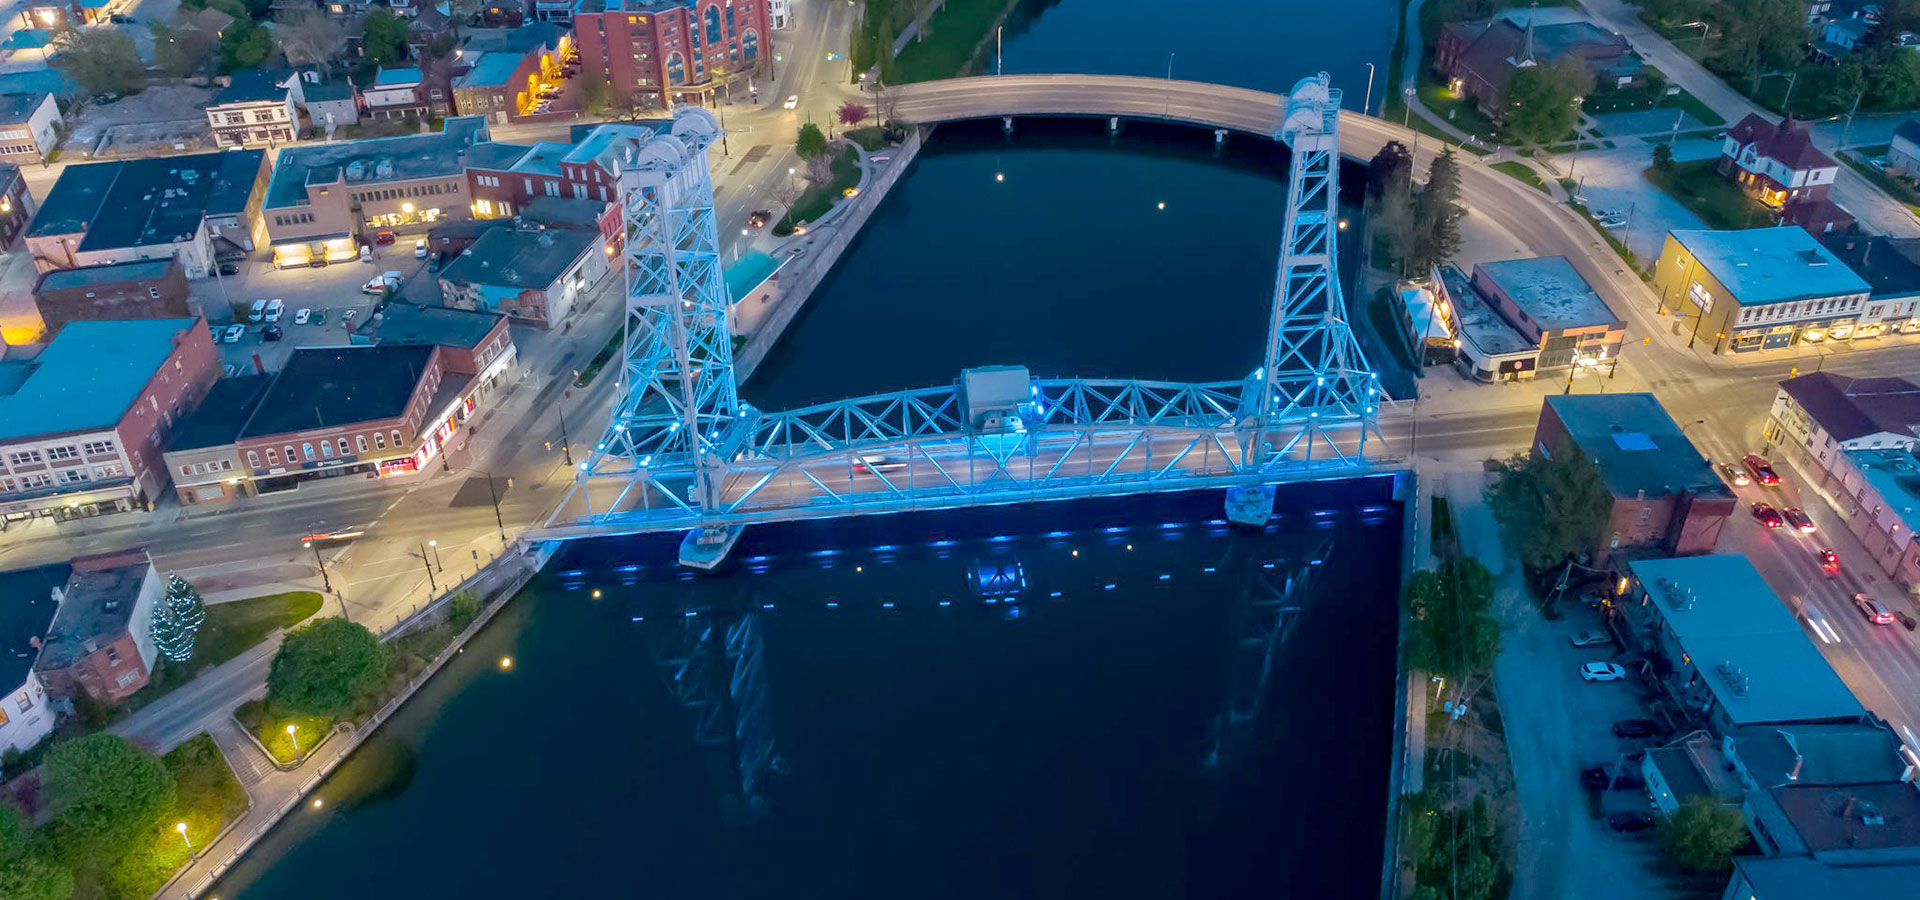 bridge 13 lit up in blue